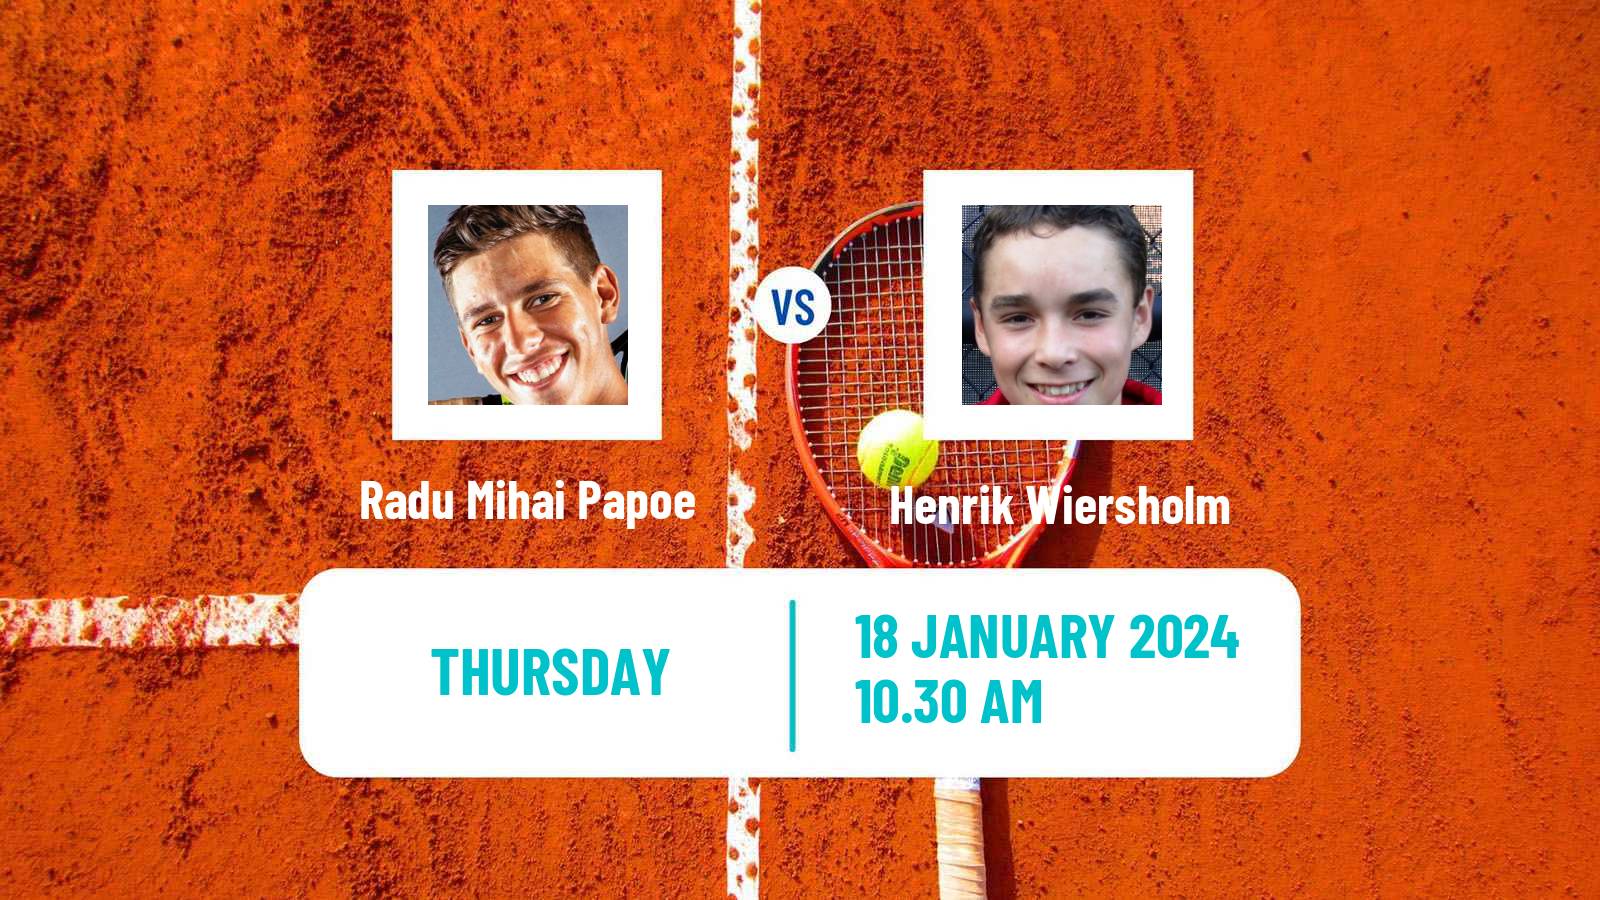 Tennis ITF M25 Ithaca Ny Men Radu Mihai Papoe - Henrik Wiersholm